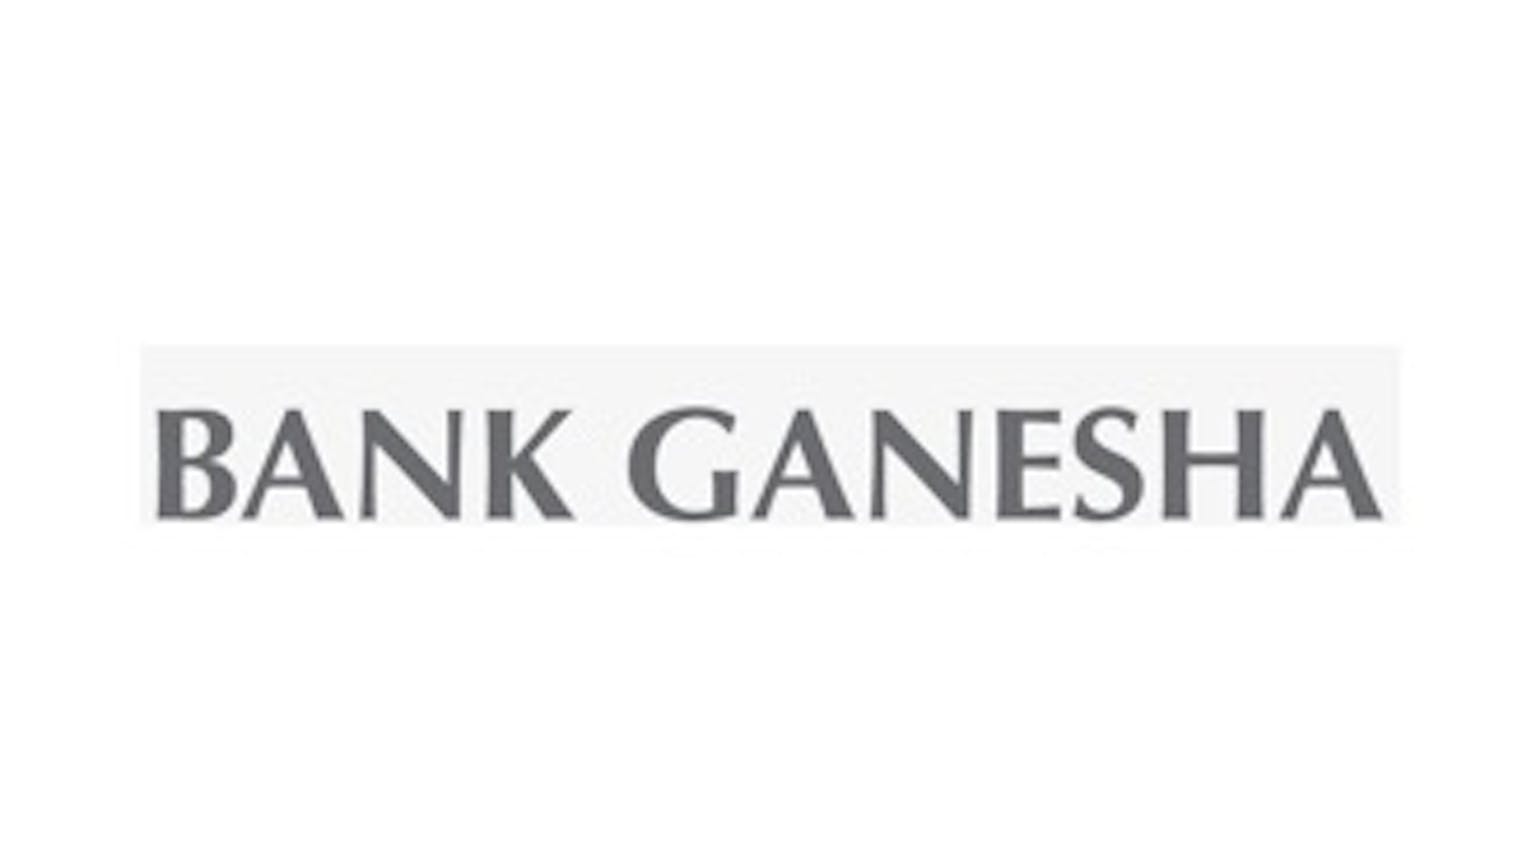 Bank Ganesha
